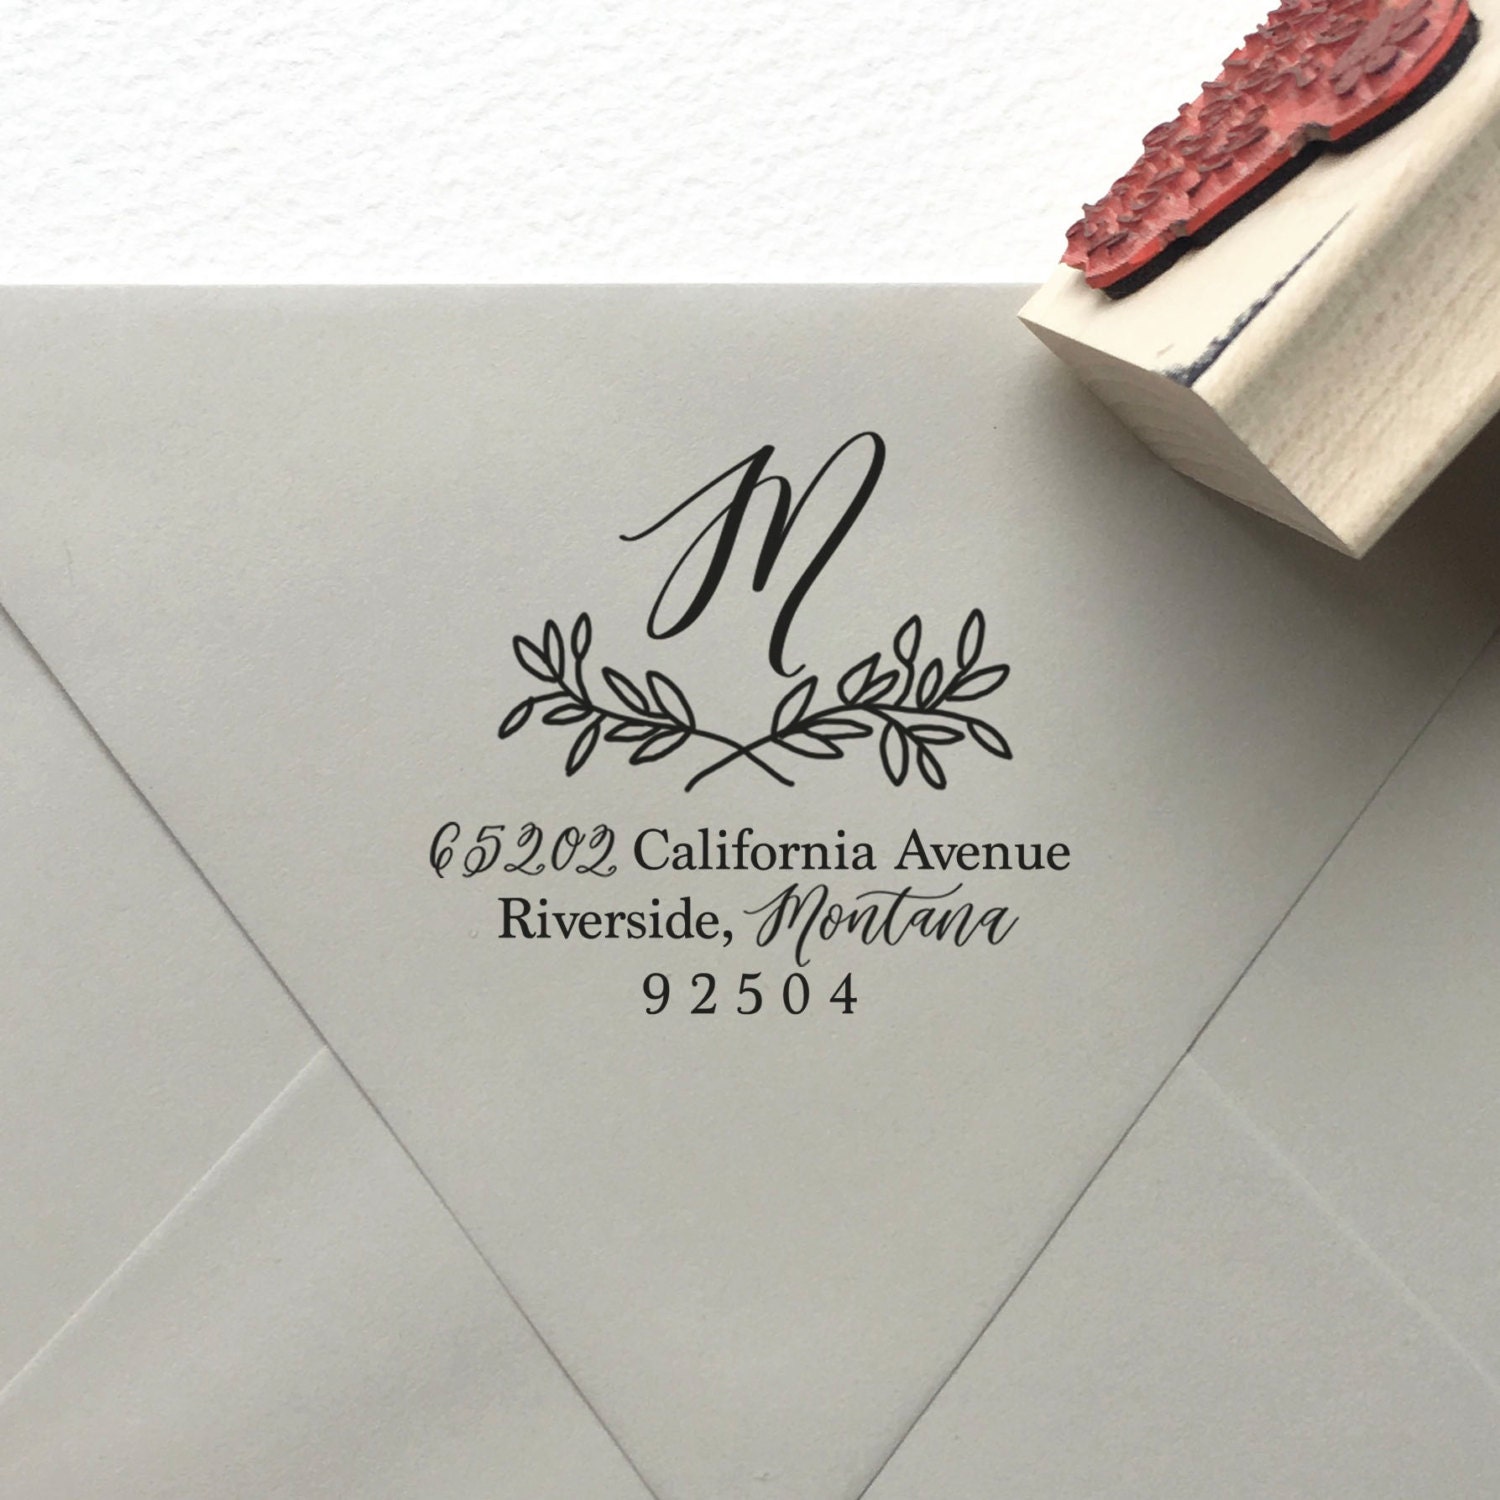 Return Address Stamp - Personalized Address Stamp - Address Stamp - Wedding Invite Stamp - Couples Wedding Stamp - Calligraphy Stamp